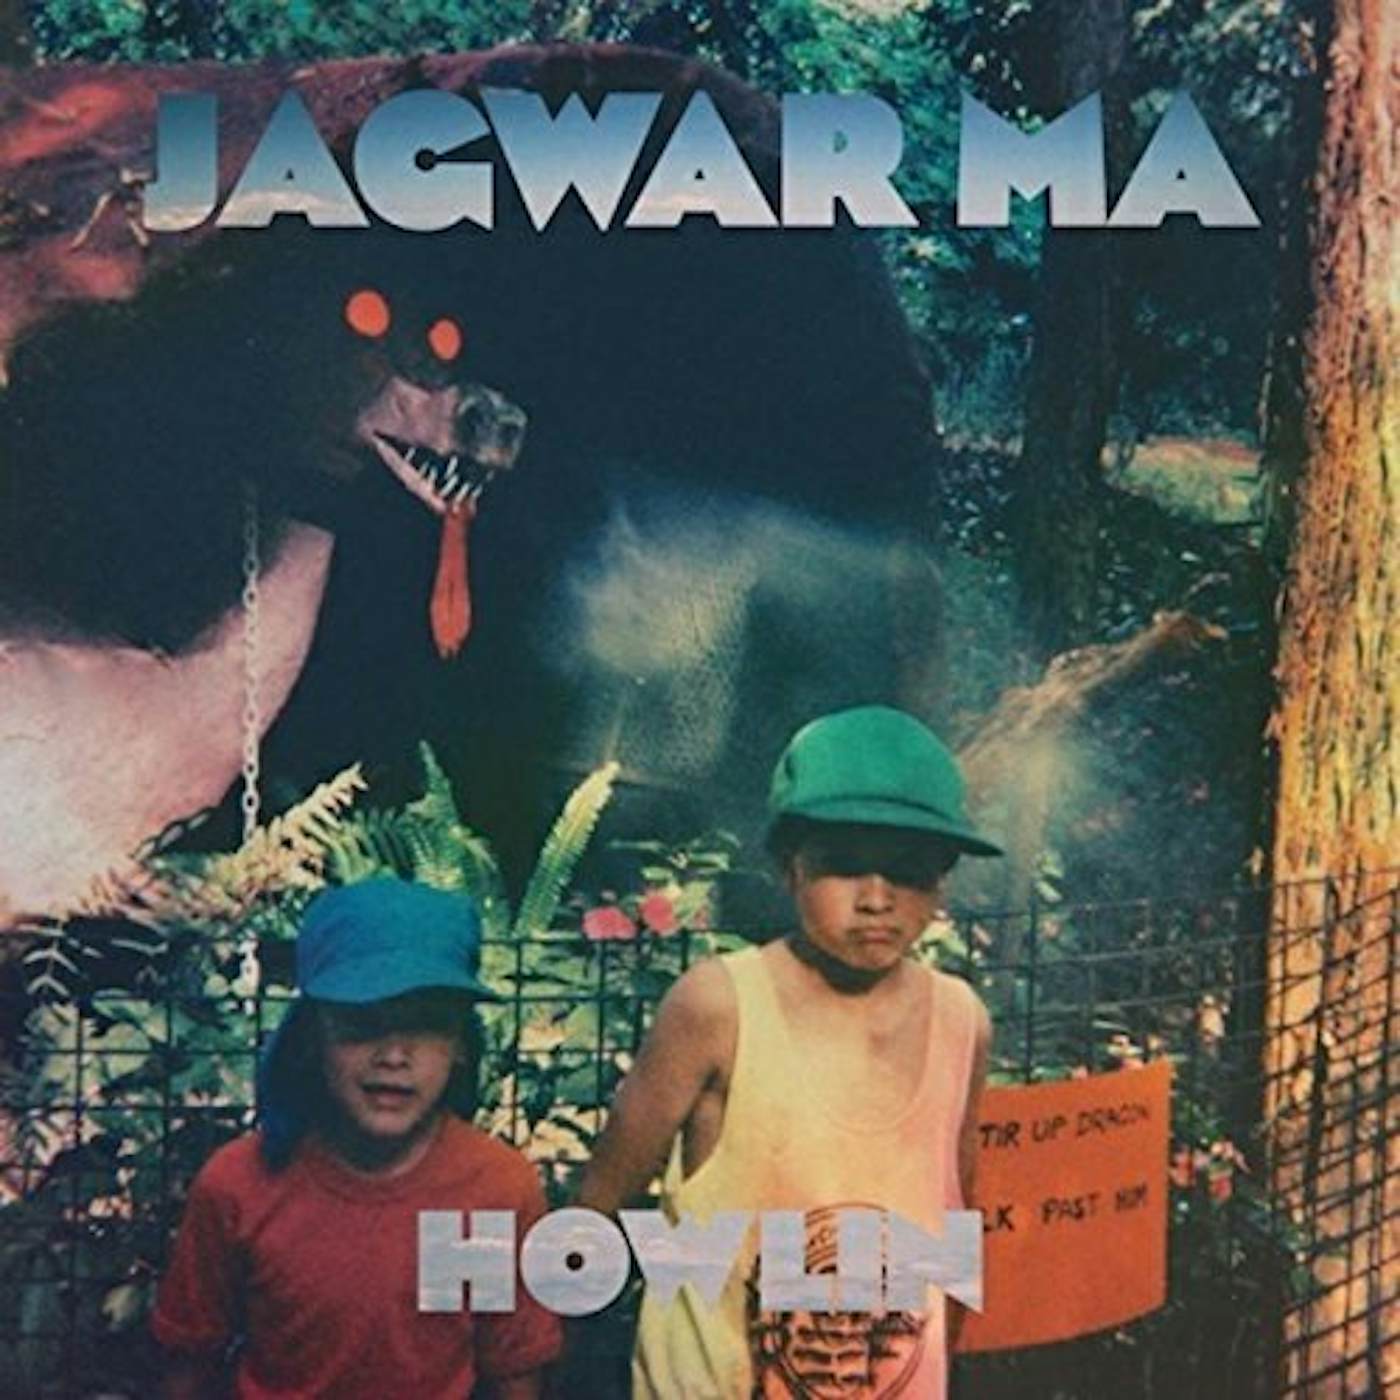 Jagwar Ma Howlin Vinyl Record